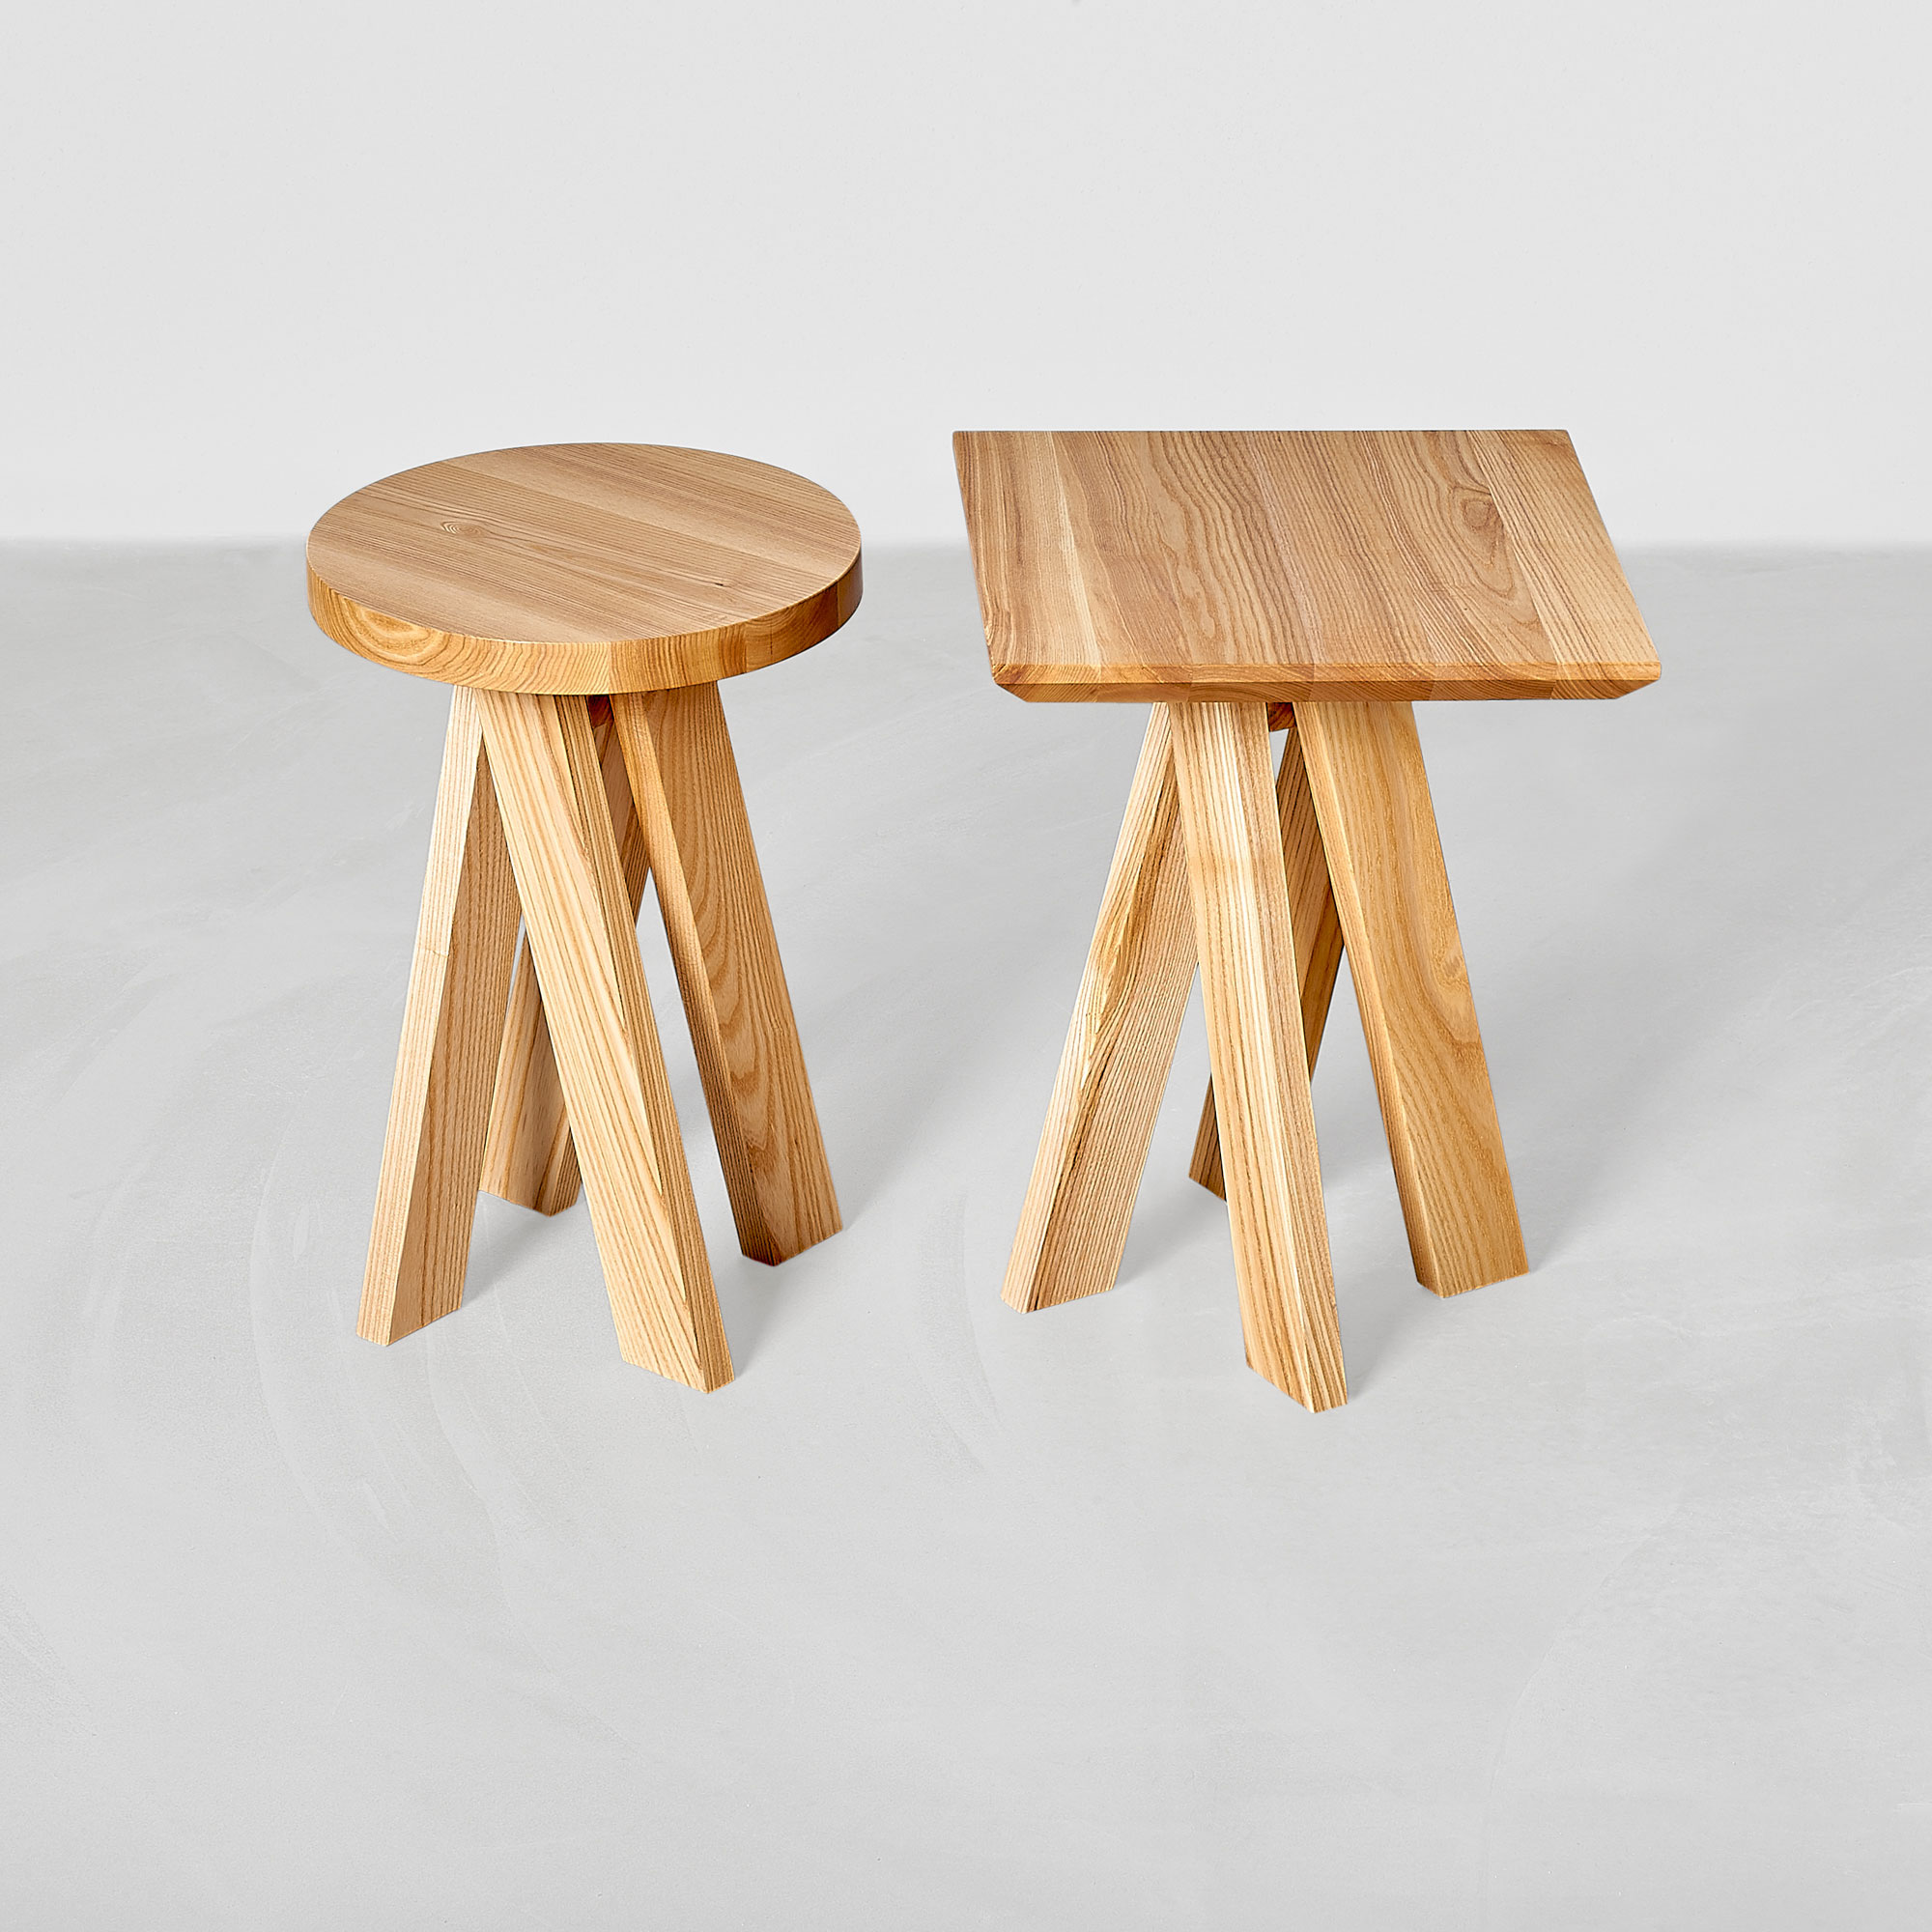 Designer Coffee Table ZIRKEL R Zirkel4730 custom made in solid wood by vitamin design